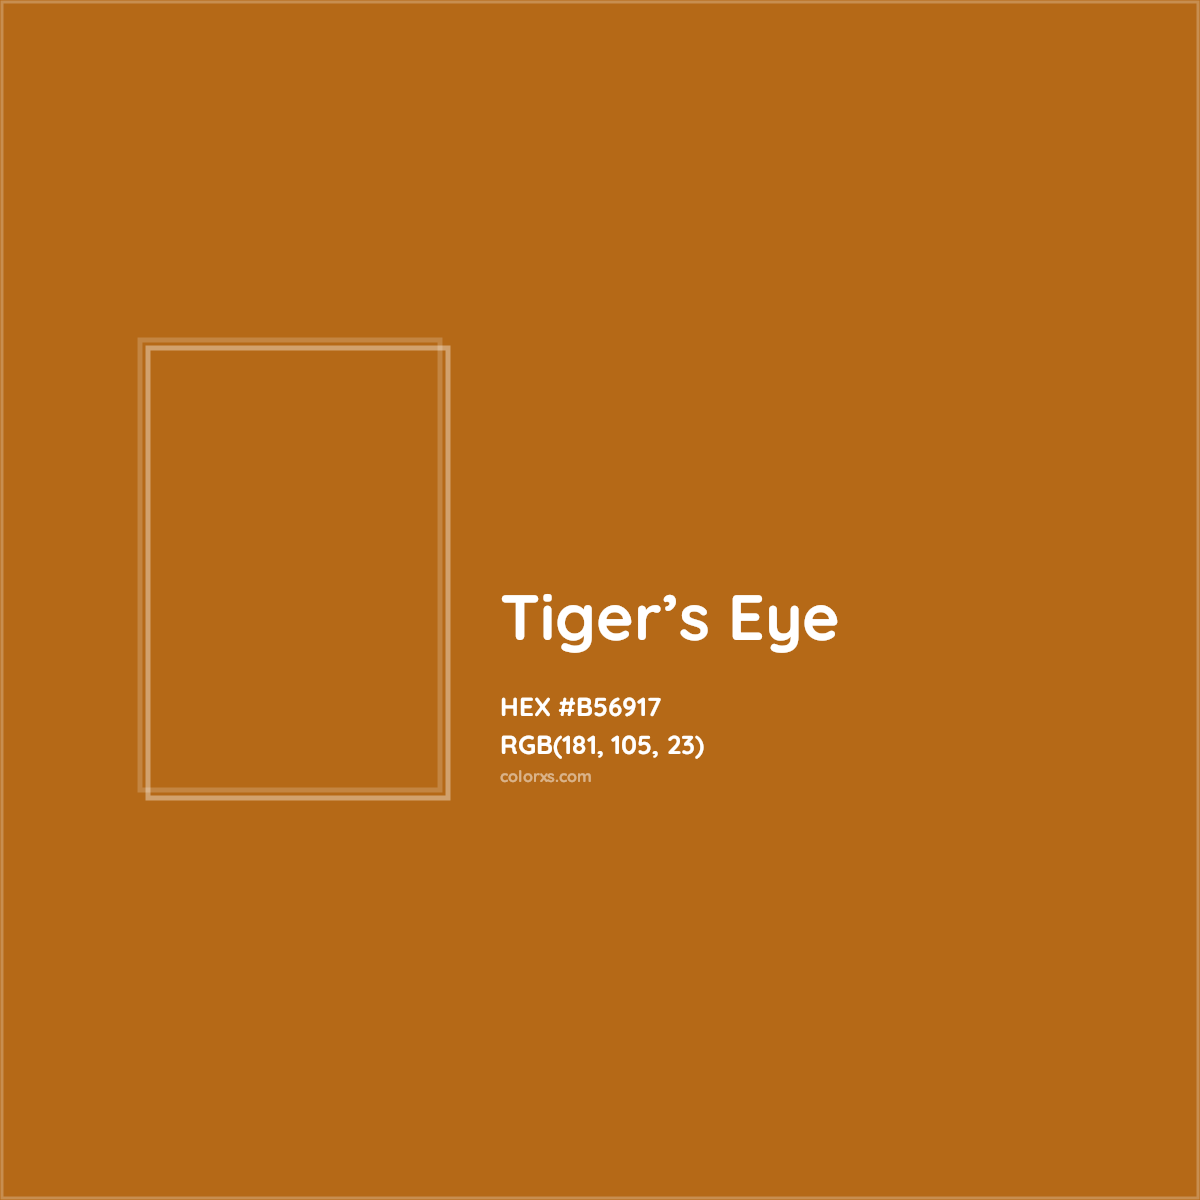 HEX #B56917 Tiger’s Eye Color - Color Code